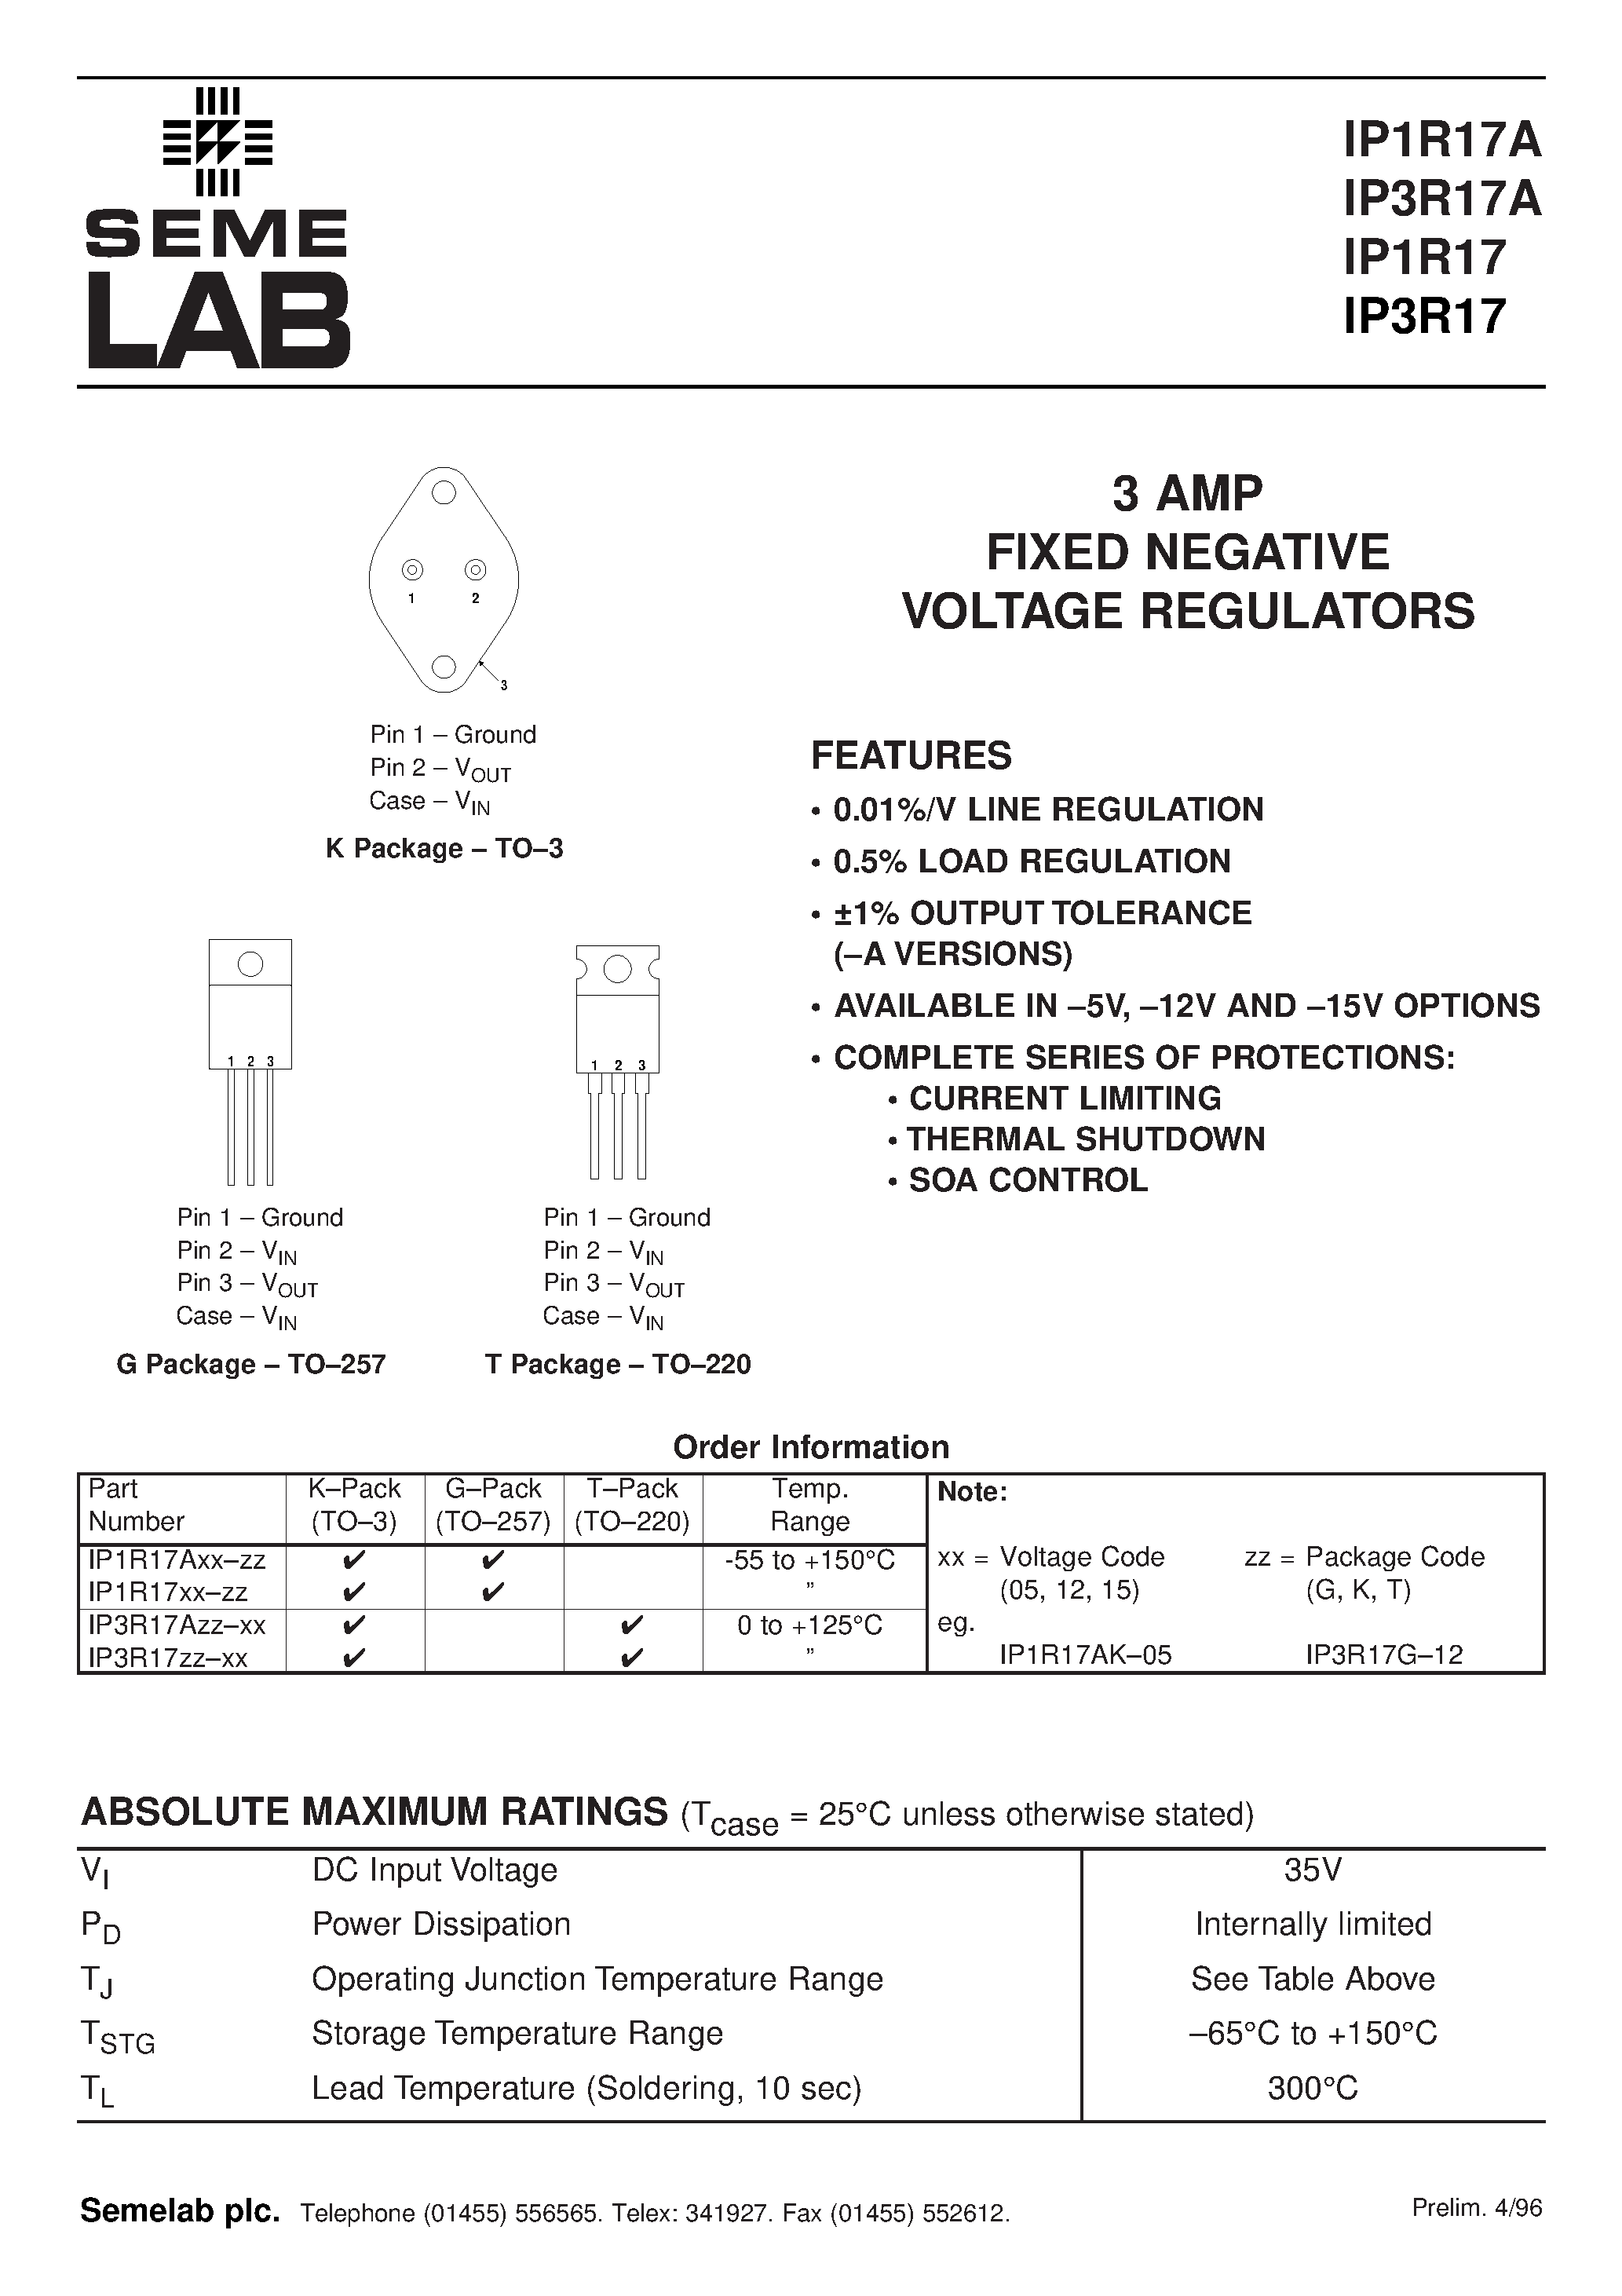 Datasheet IP1R1705-K - 3 AMP FIXED NEGATIVE VOLTAGE REGULATORS page 1